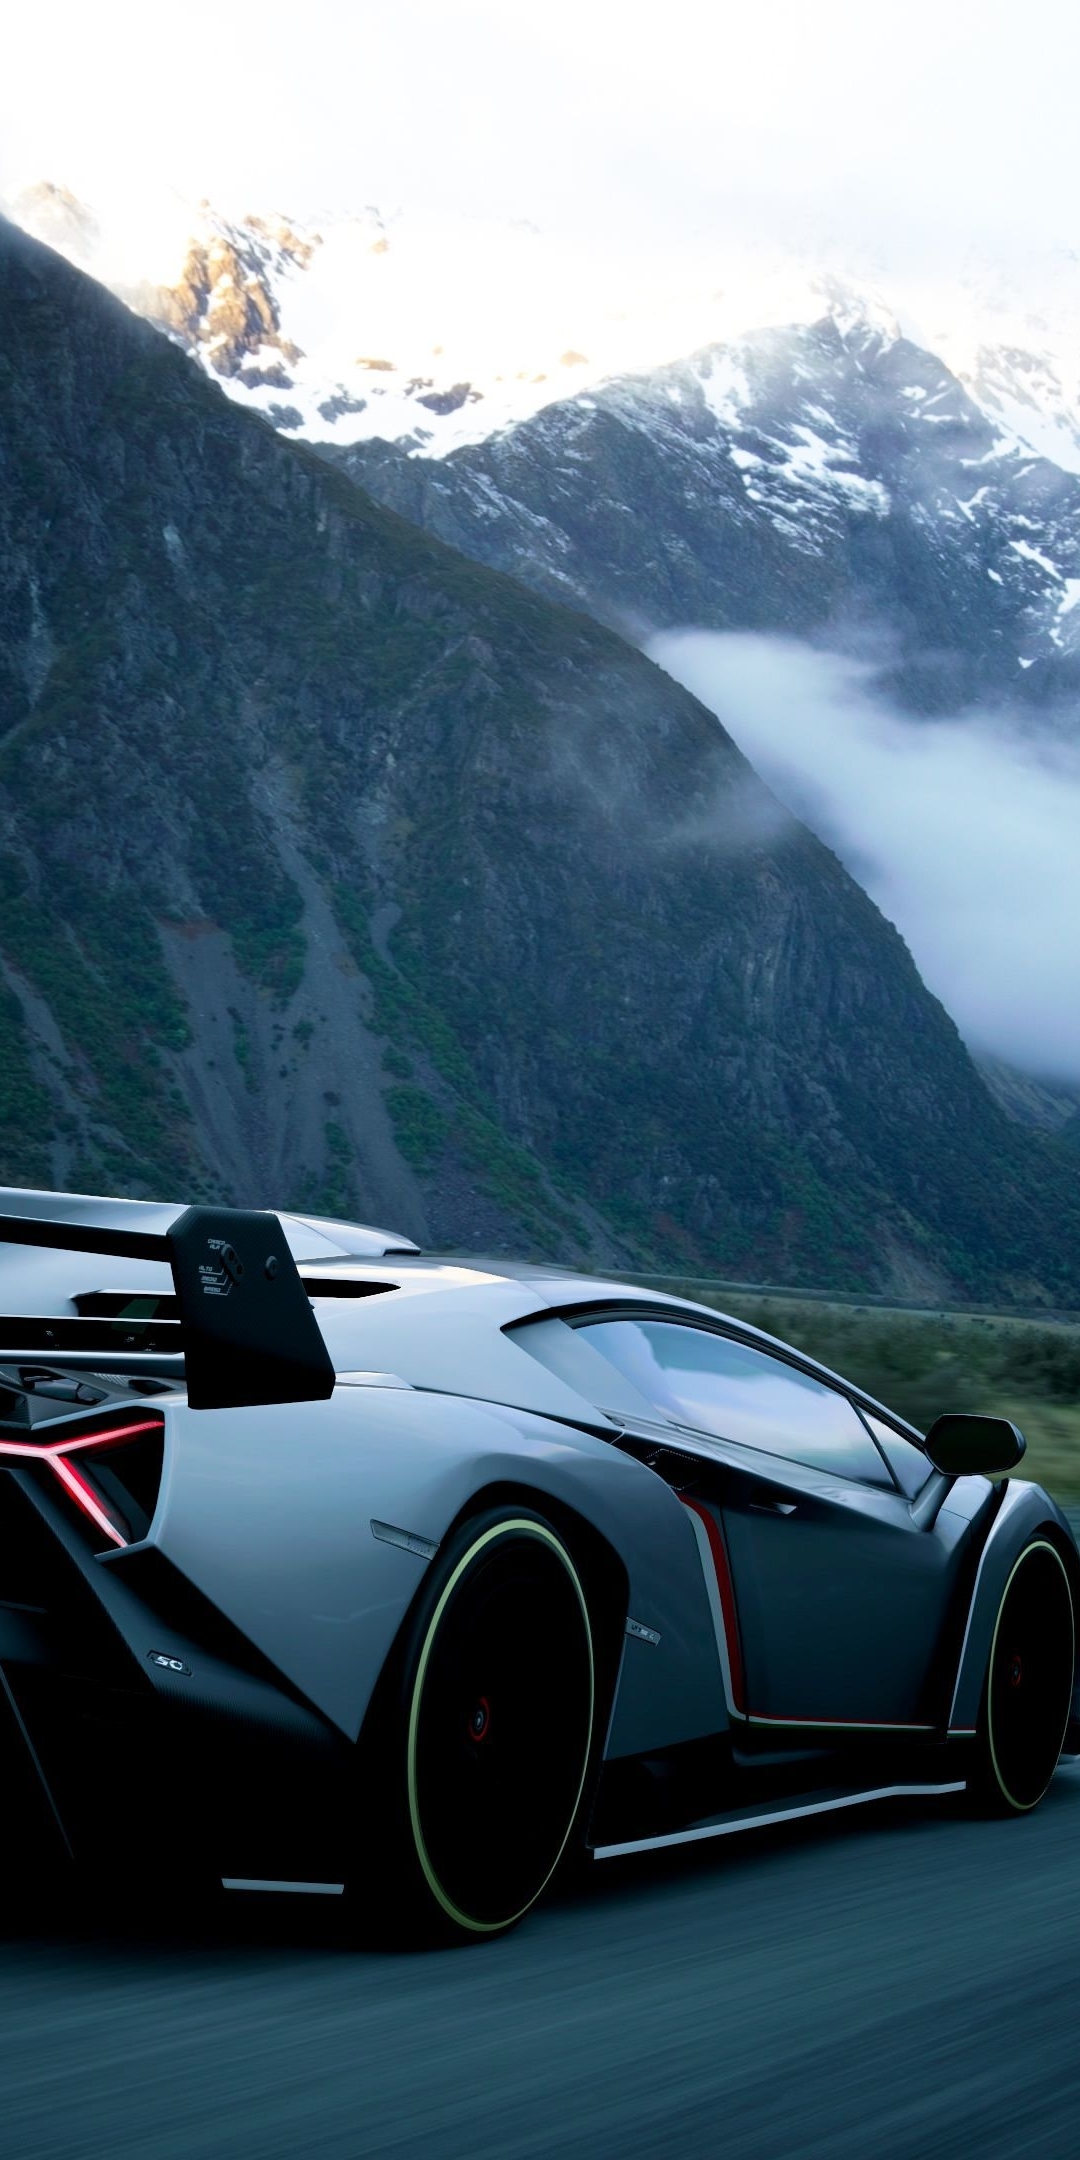 Image: Lamborghini, Veneno, Gran Turismo, landscape, clouds, mountains, road, speed